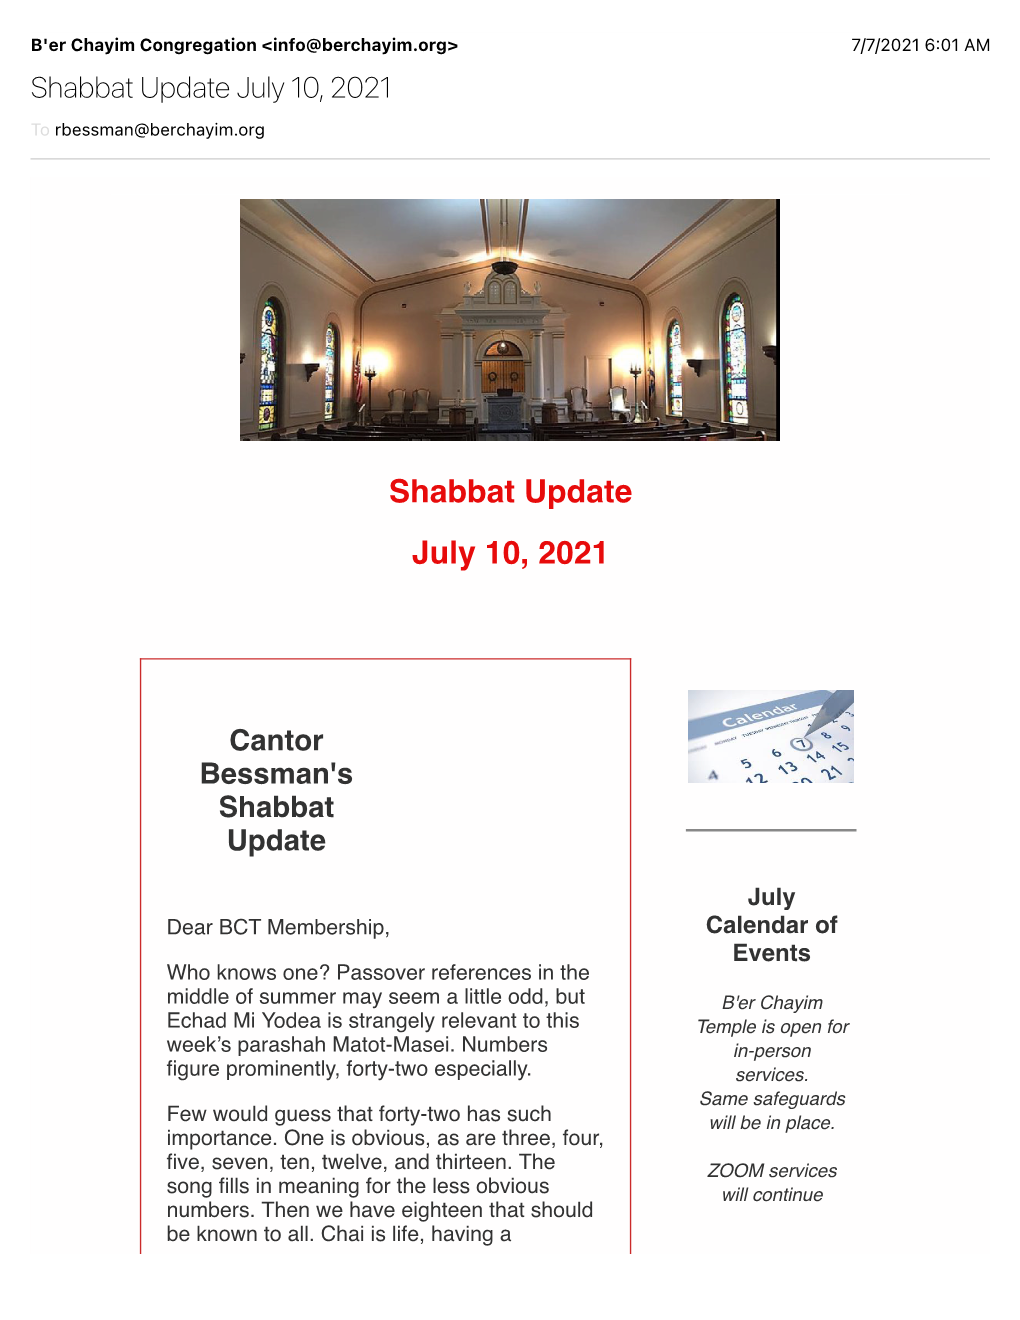 Shabbat Update July 10, 2021